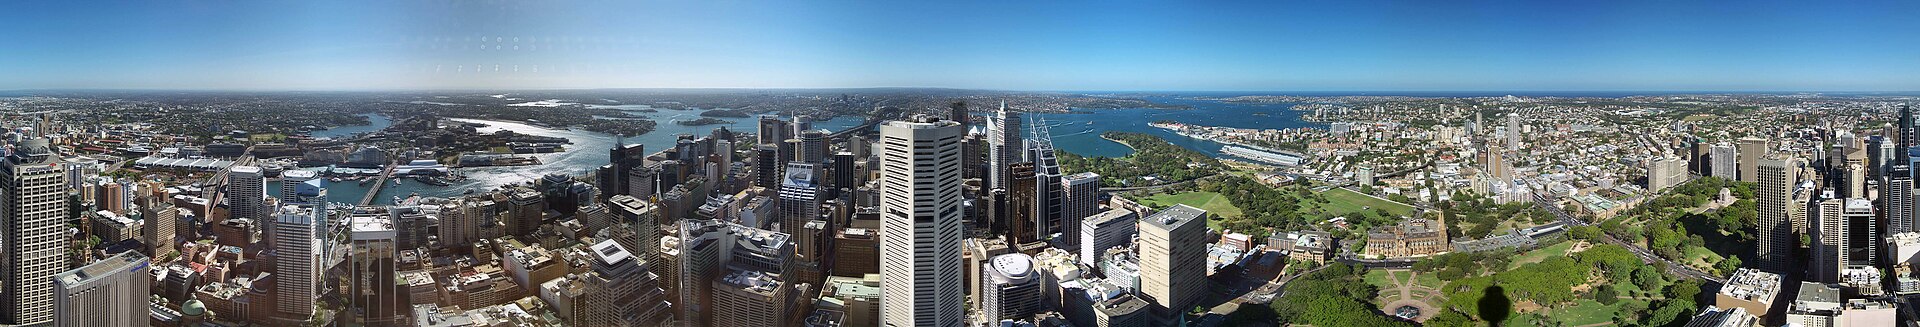 1920px-Sydney_Tower_Panorama.jpg